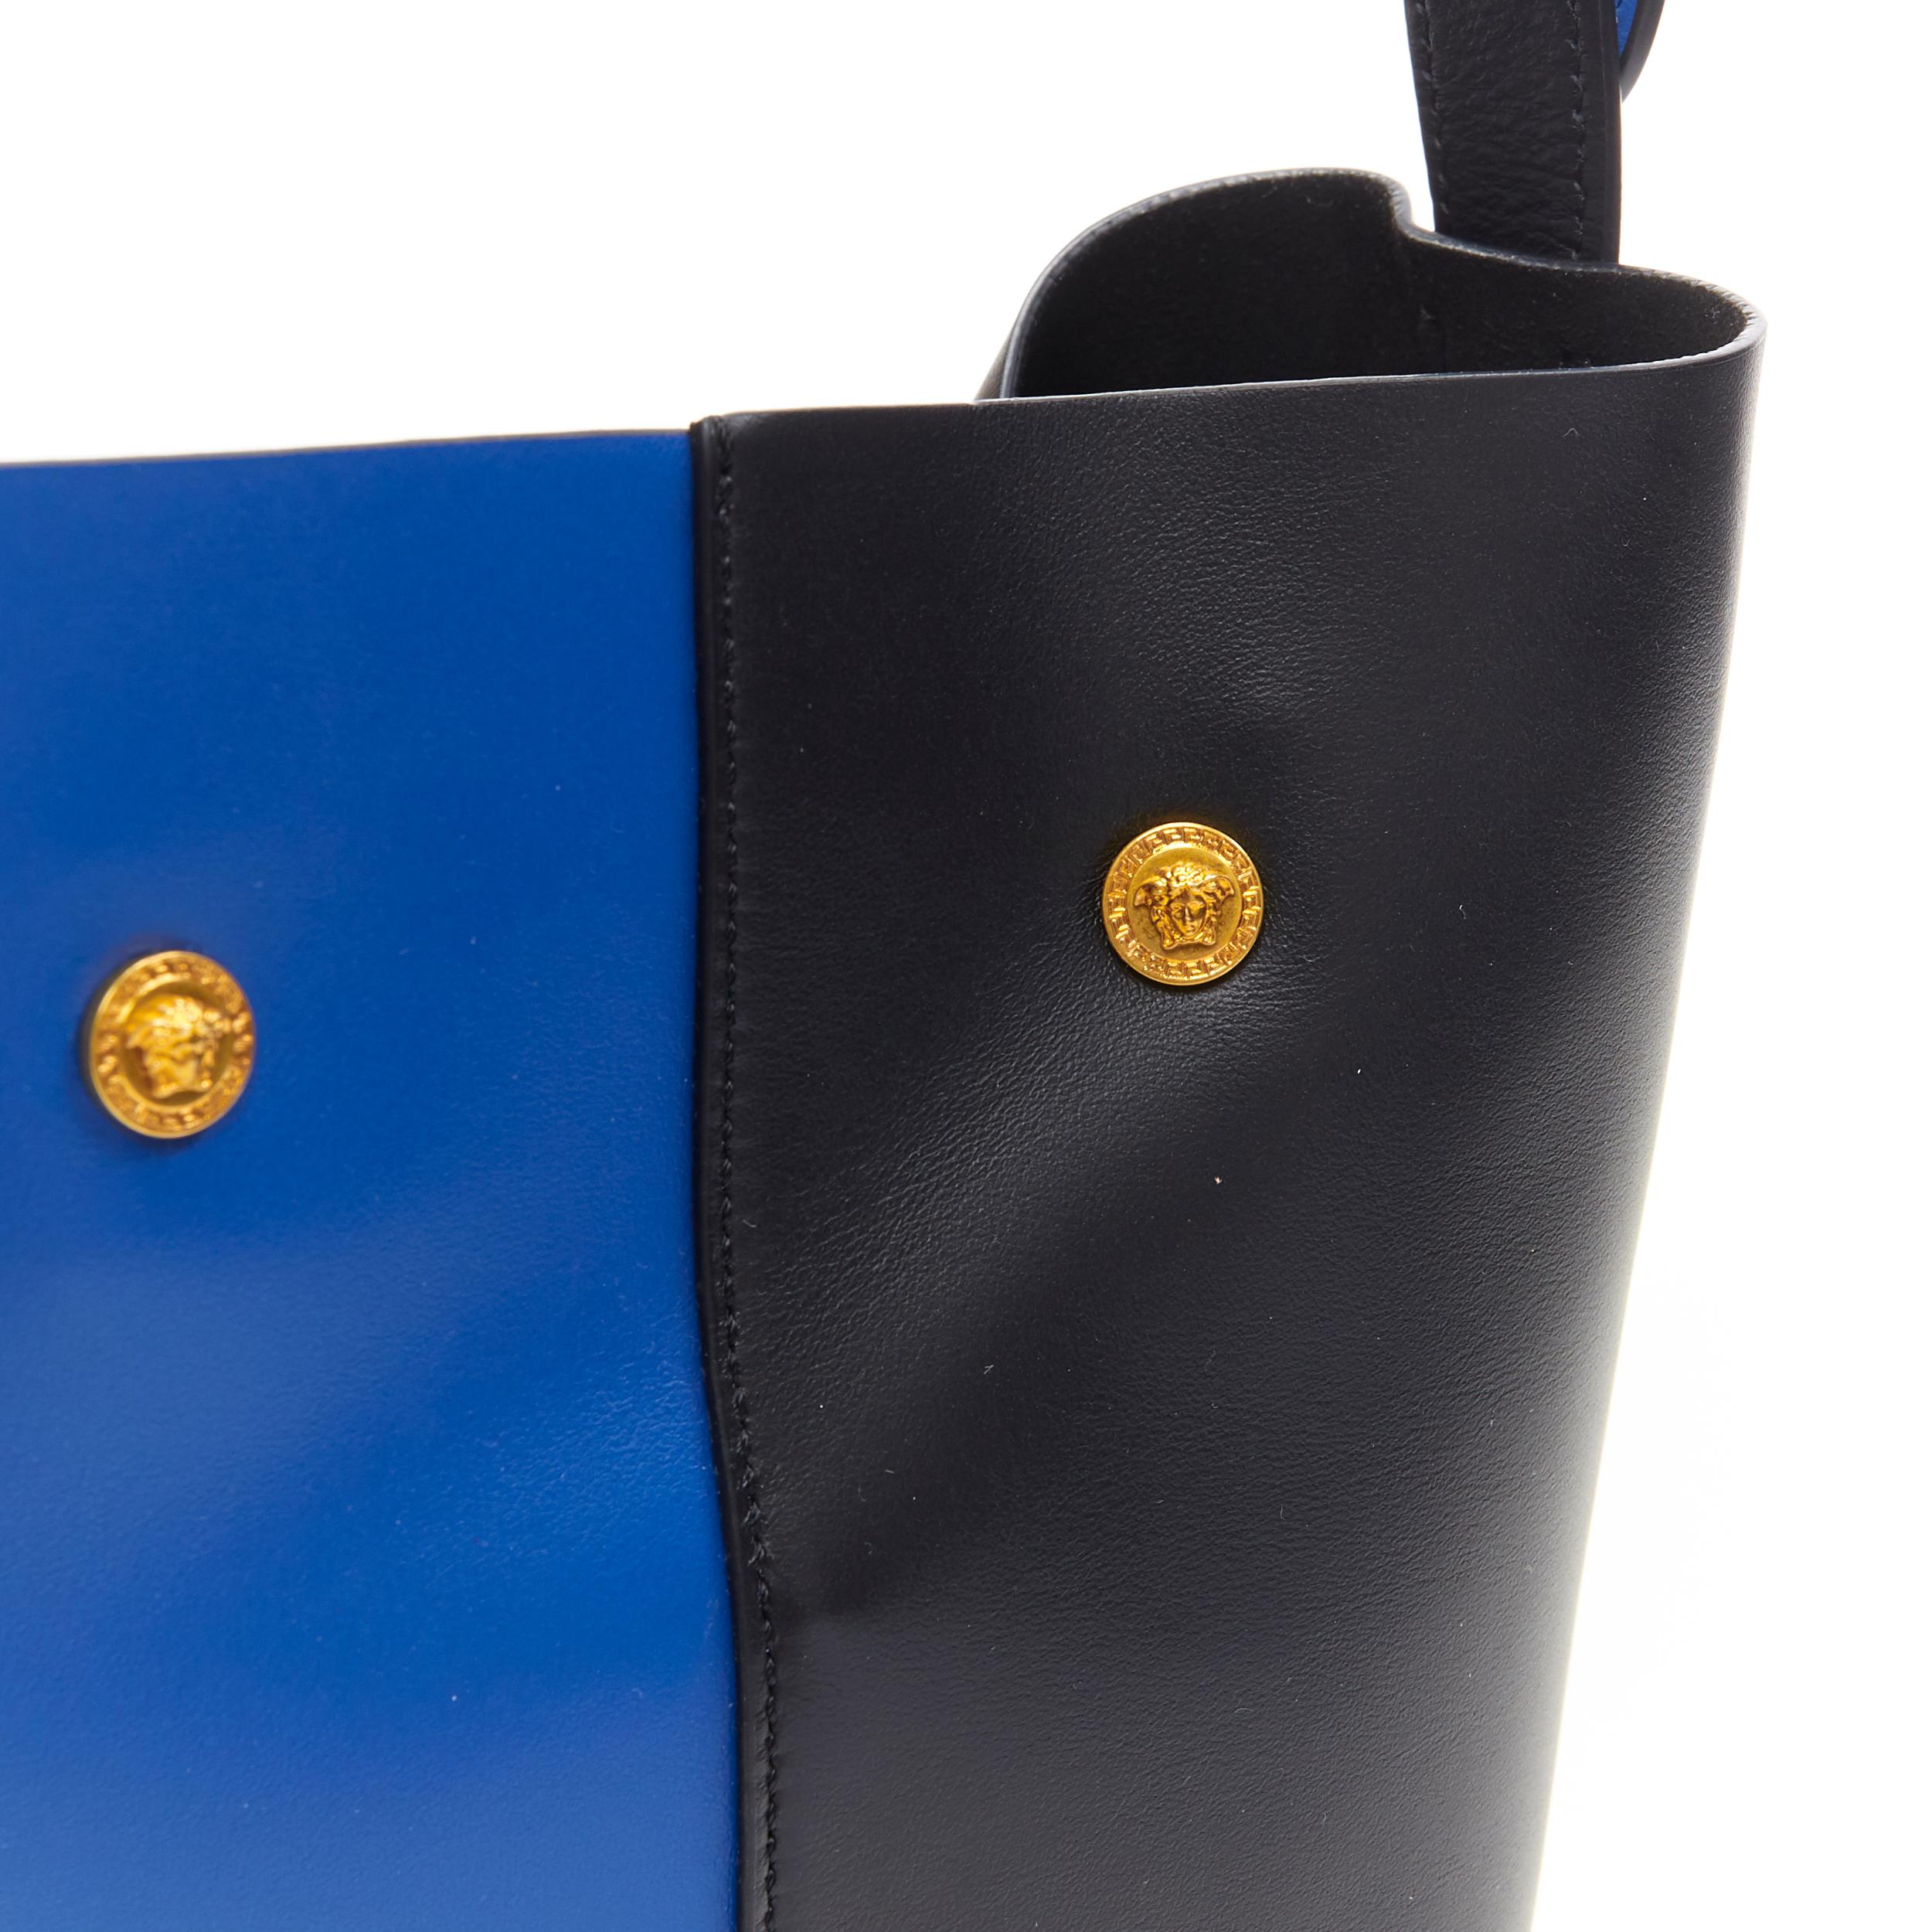 new VERSACE AW18 blue black calf leather Boccioni silk scarf tie bucket bag 2